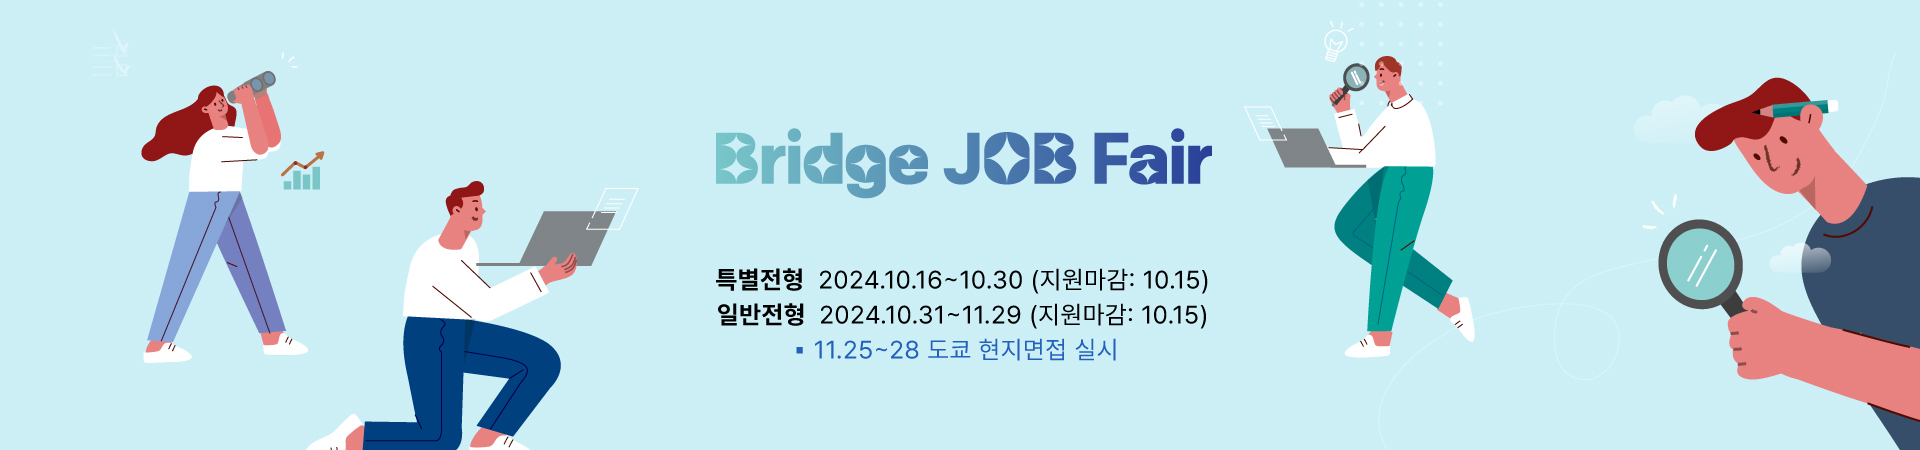 KITA한국무역협회 해외채용박람회 / 2021 Part3 / Bridge JOB Fair / 일시 : 2021.10.15 ~ 11.03 / 지원마감 : 2021.10.14 까지